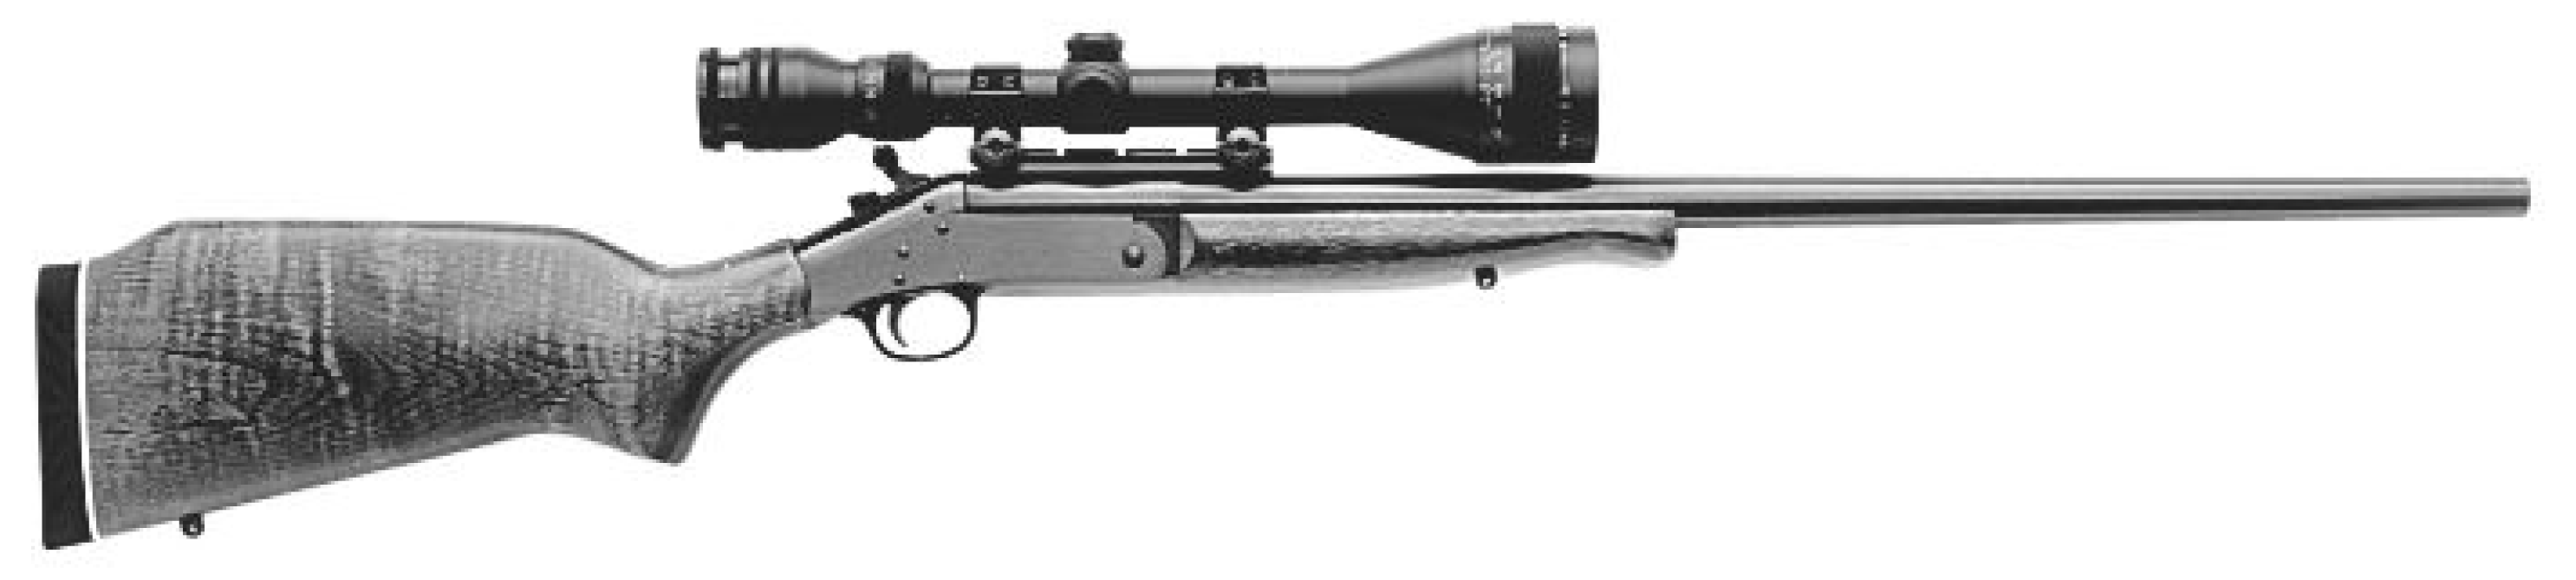 Handi-Rifle (aka Handi-Gun)